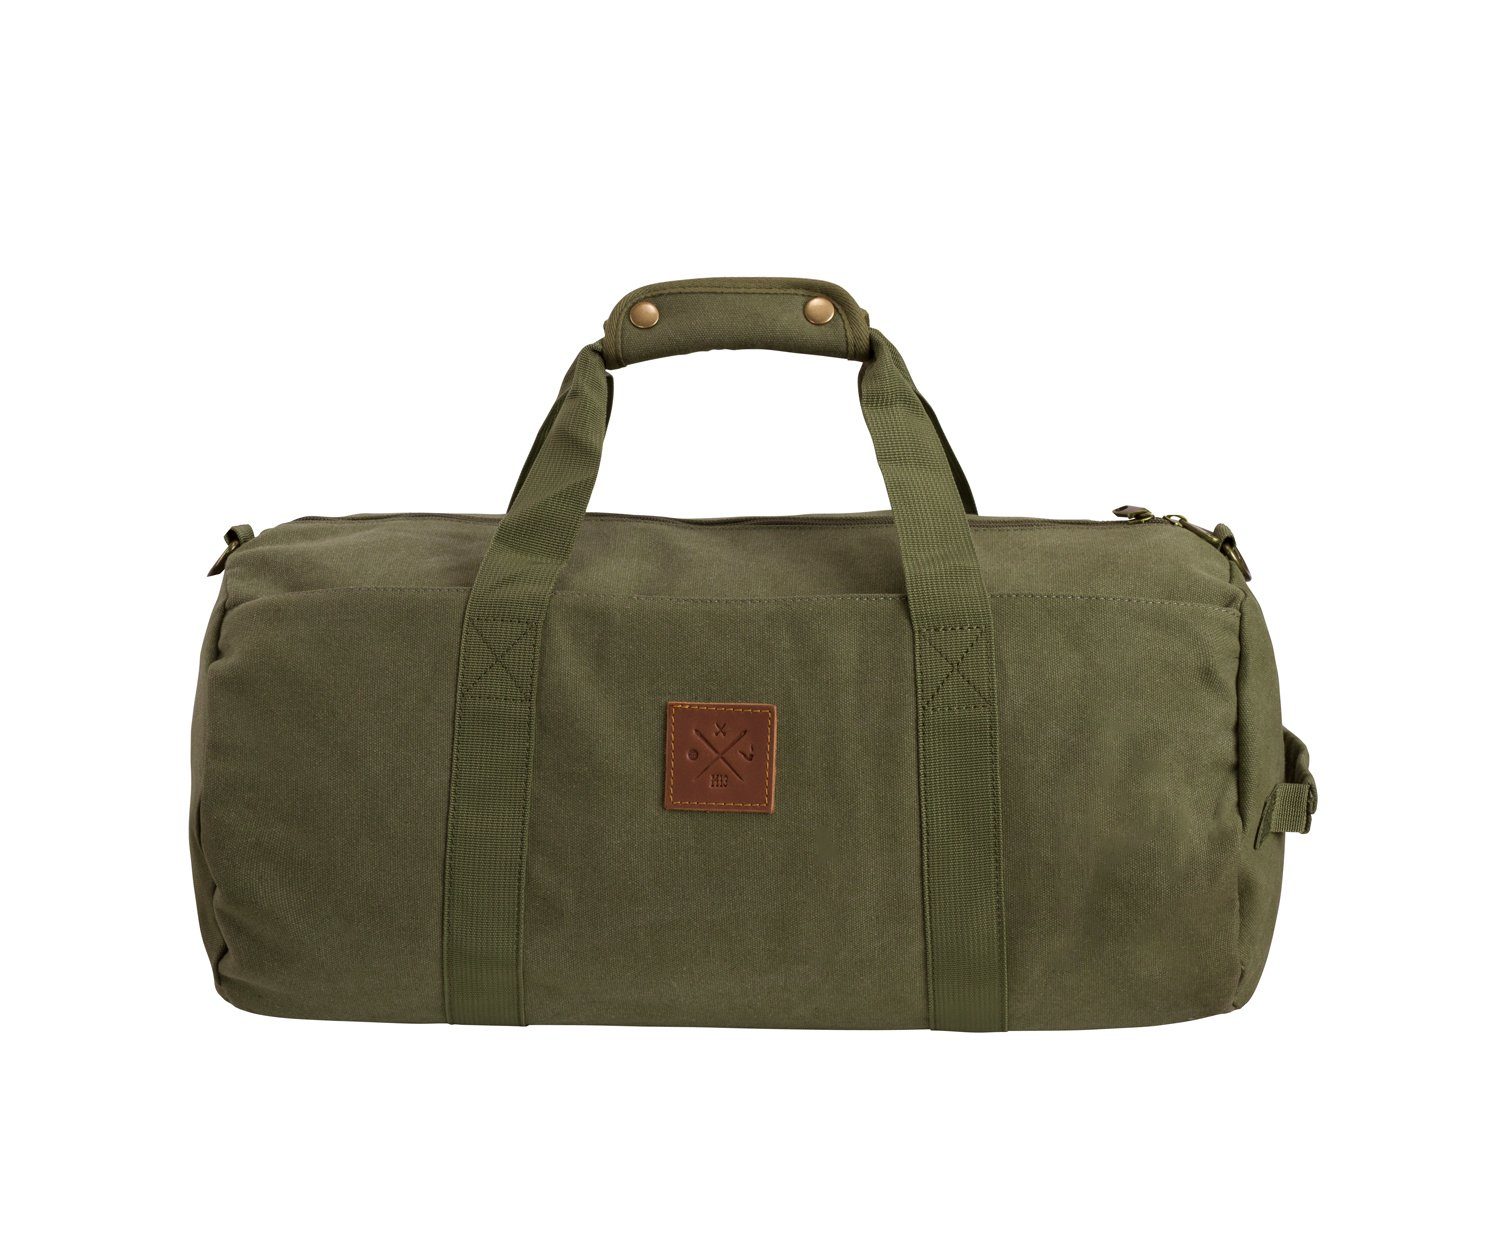 Manufaktur13 Sporttasche Canvas Barrel Bag - Sporttasche, Duffel Bag, 24L Fassungsvermögen Olive/Khaki